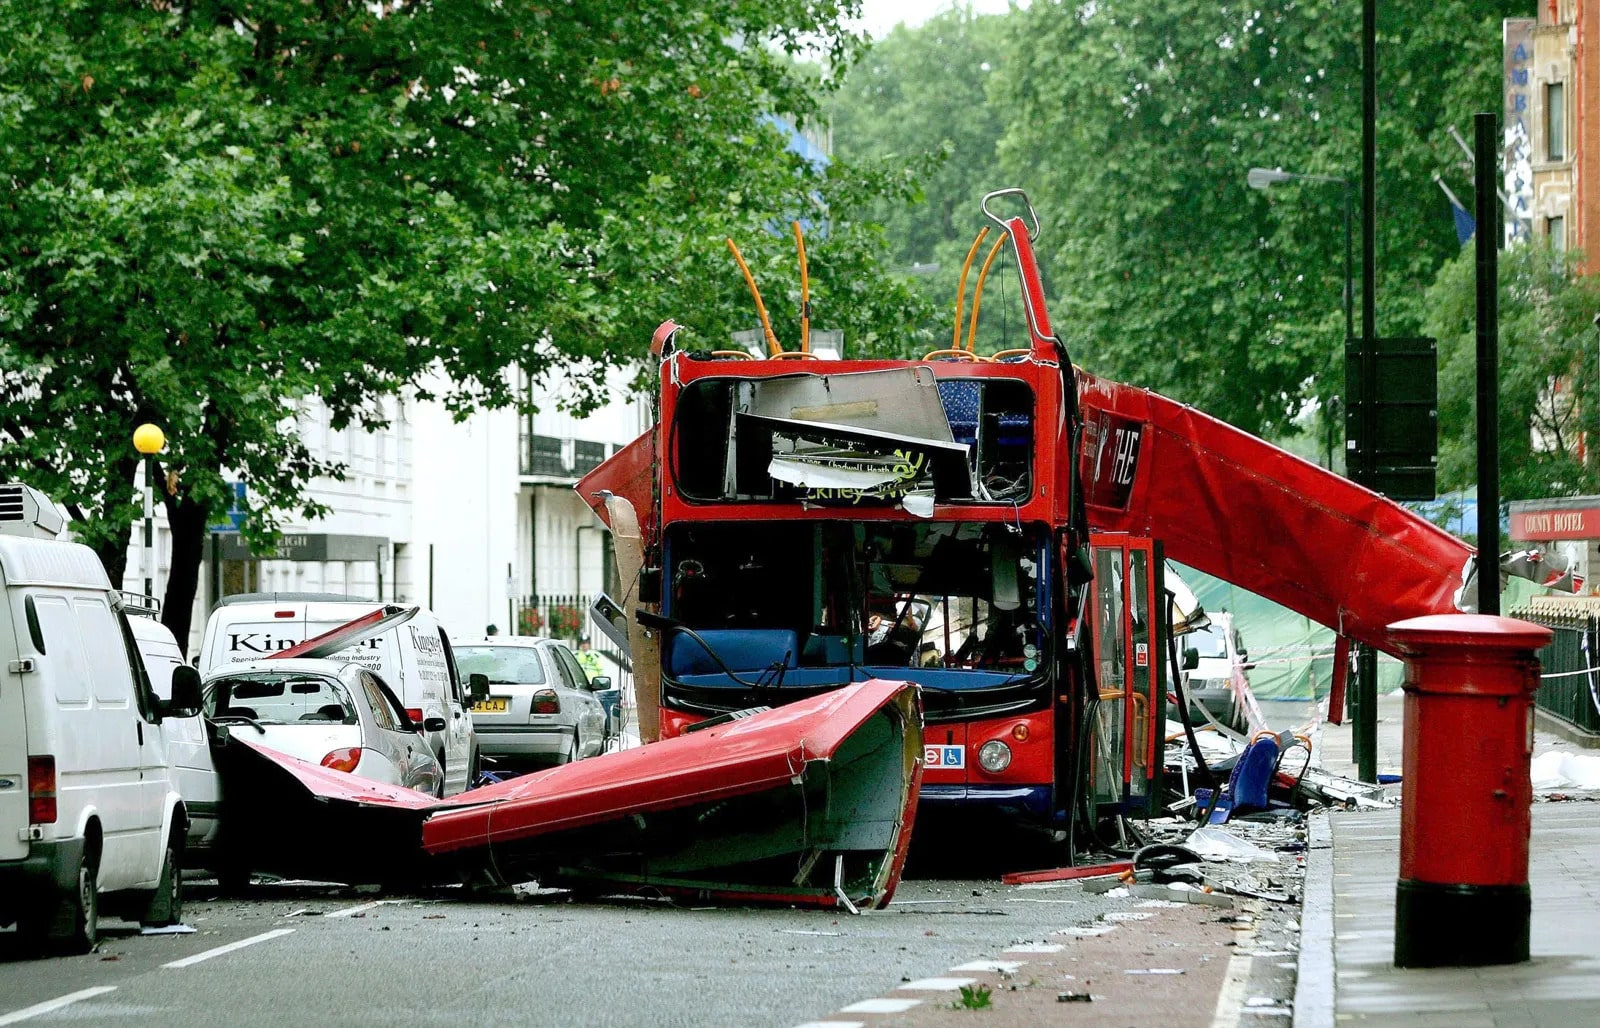 bus-Wreckage-bomb-part-city-Tavistock-Square-July-7-2005-min.jpg